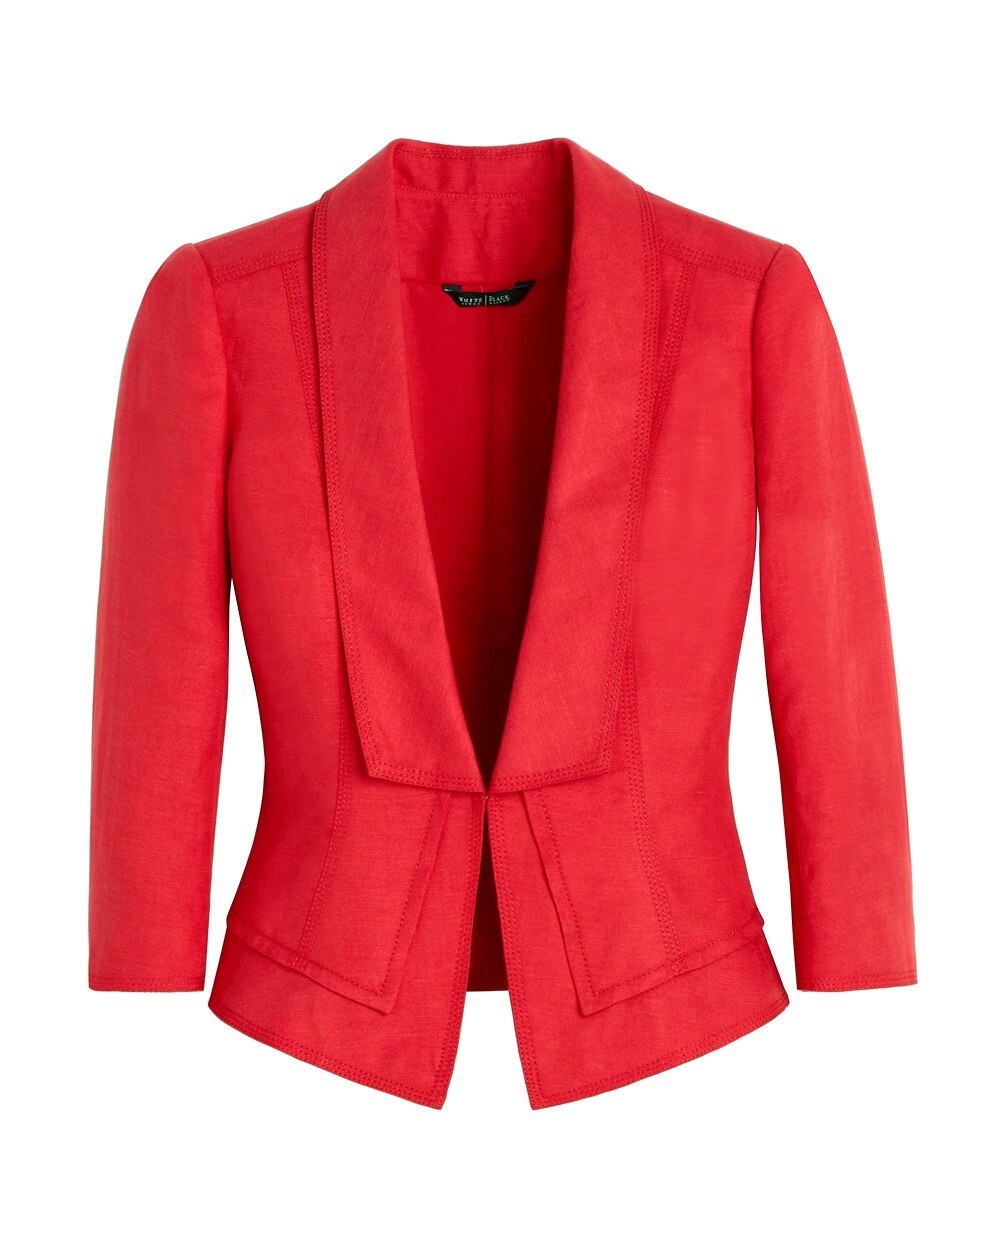 3-4-sleeve-framed-lapel-jacket-shop-women-s-work-attire-professional-clothing-business